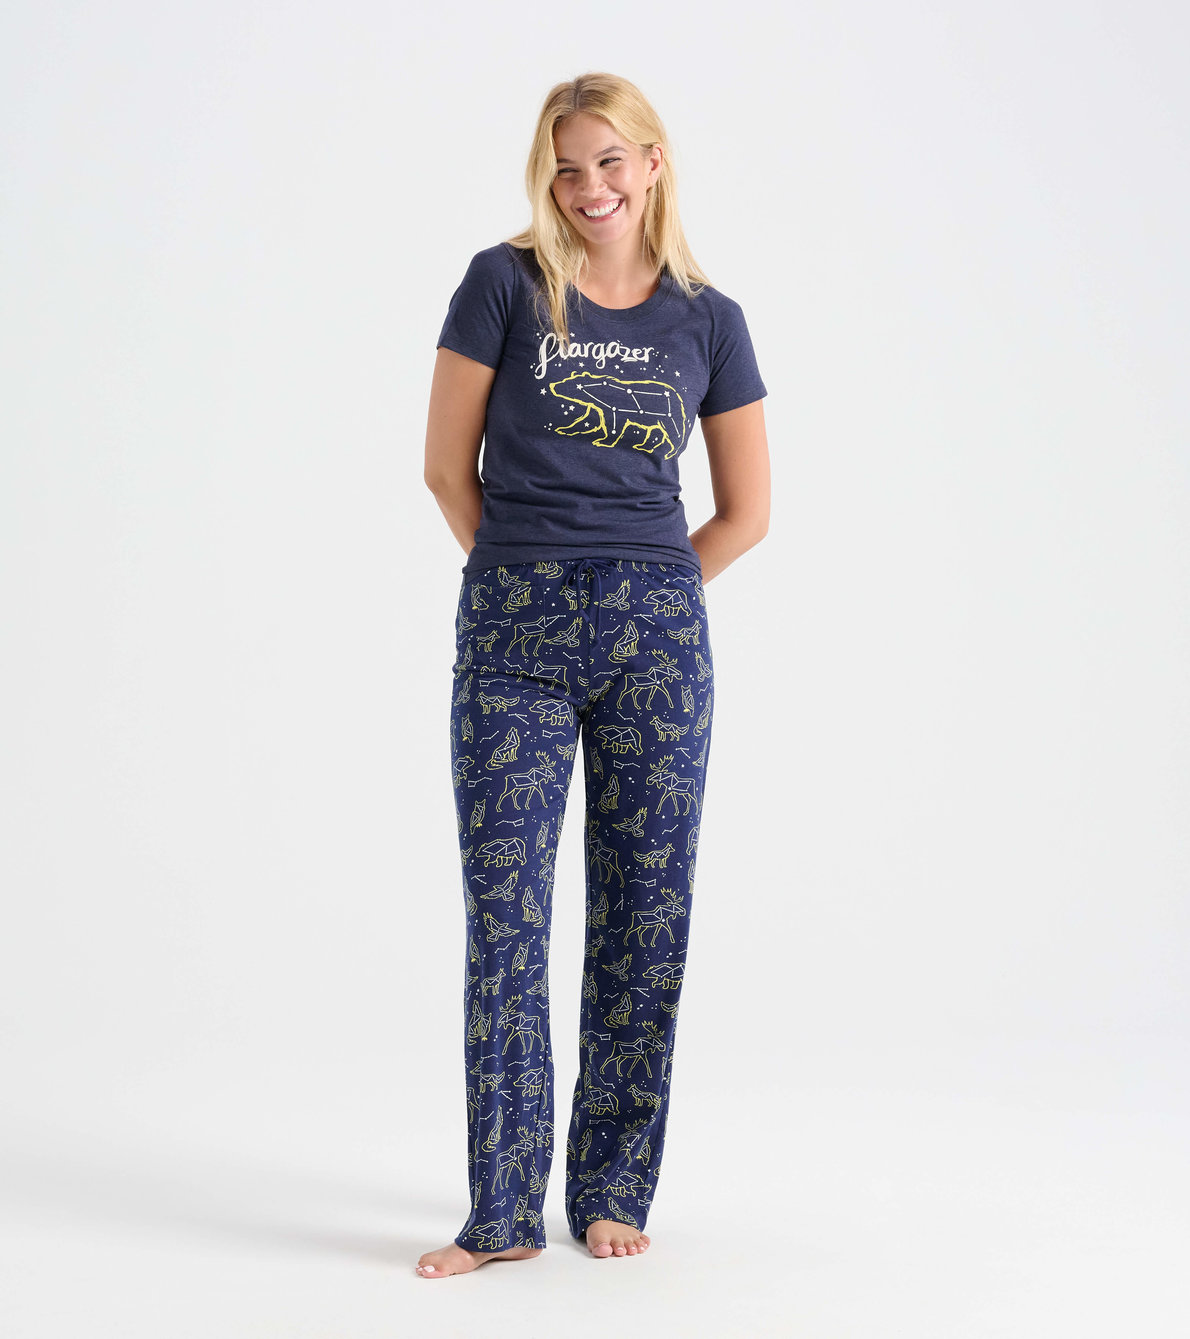 View larger image of Women's Star Gazer T-Shirt and Pants Pajama Separates